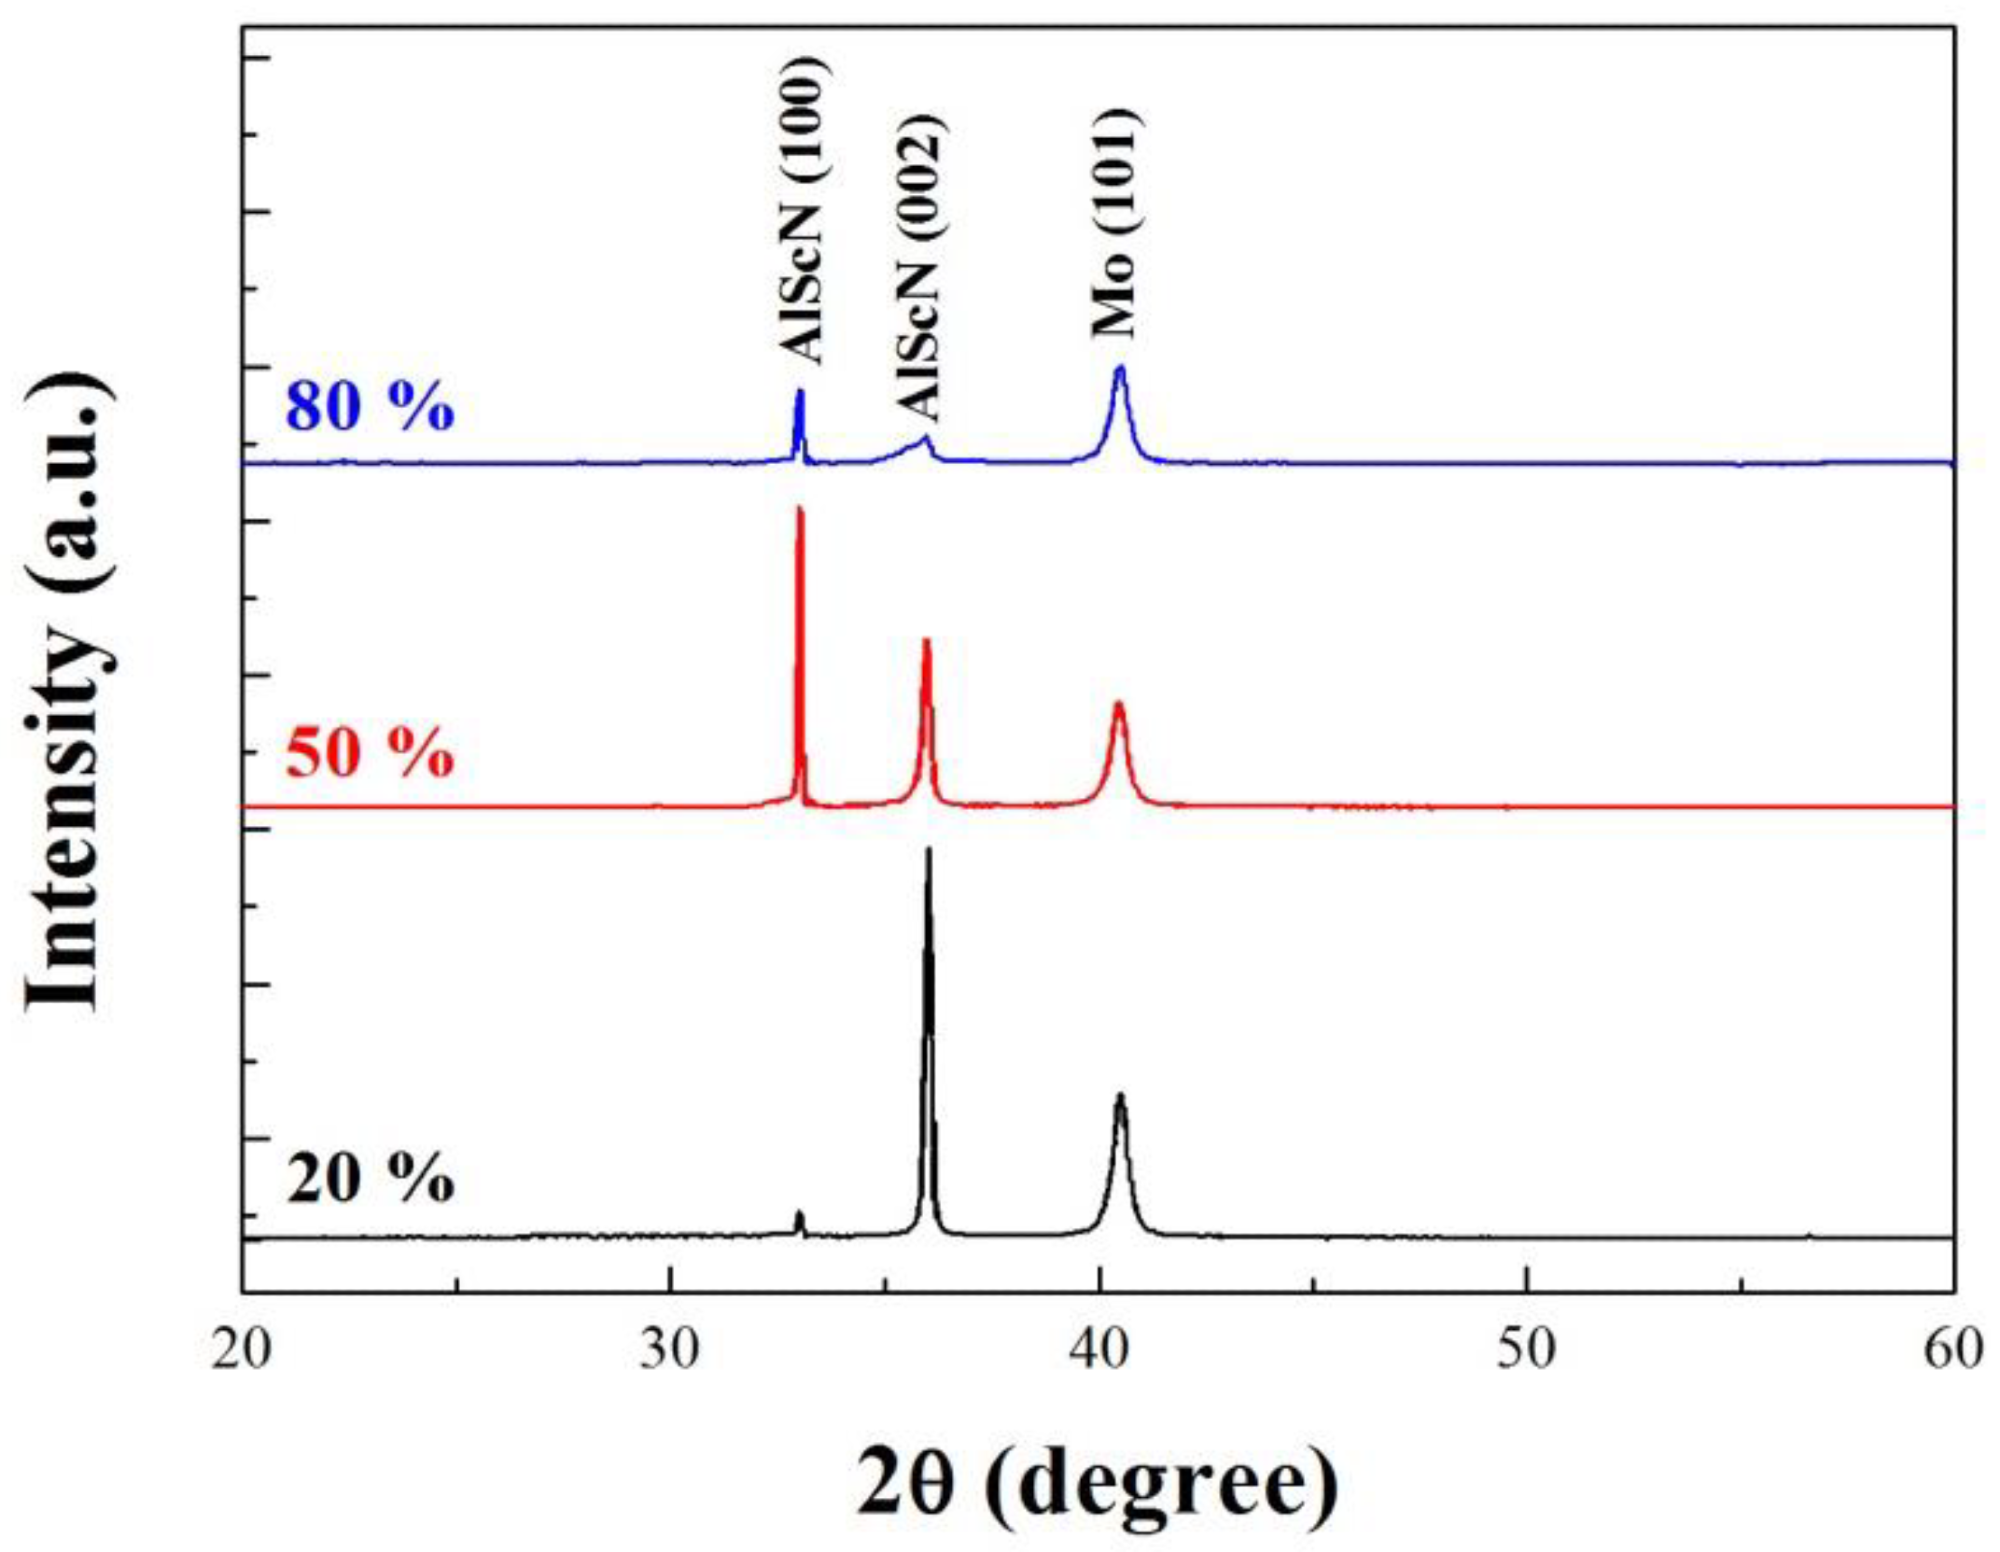 XRD diffraction patterns of AlScN films deposited at different sputtering nitrogen ratios (N2/N2 + Ar).